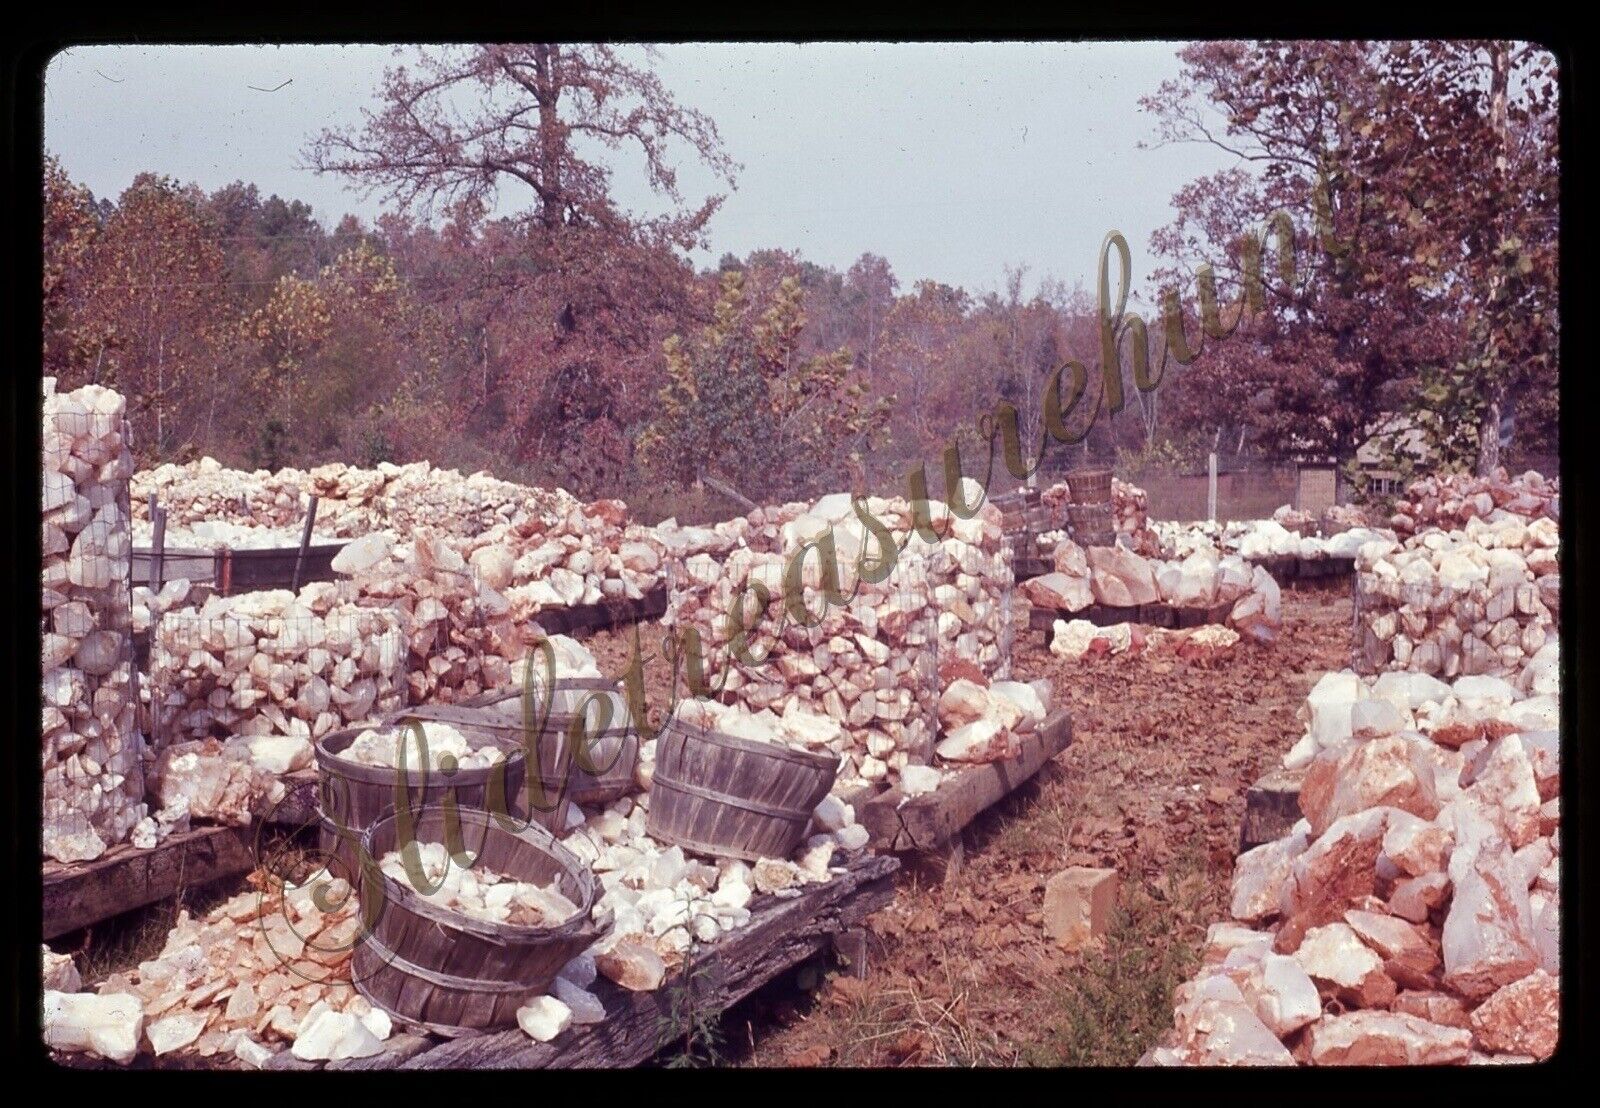 Hot Springs Arkansas Quartz Crystal Rocks 35mm Slide 1960s 1967